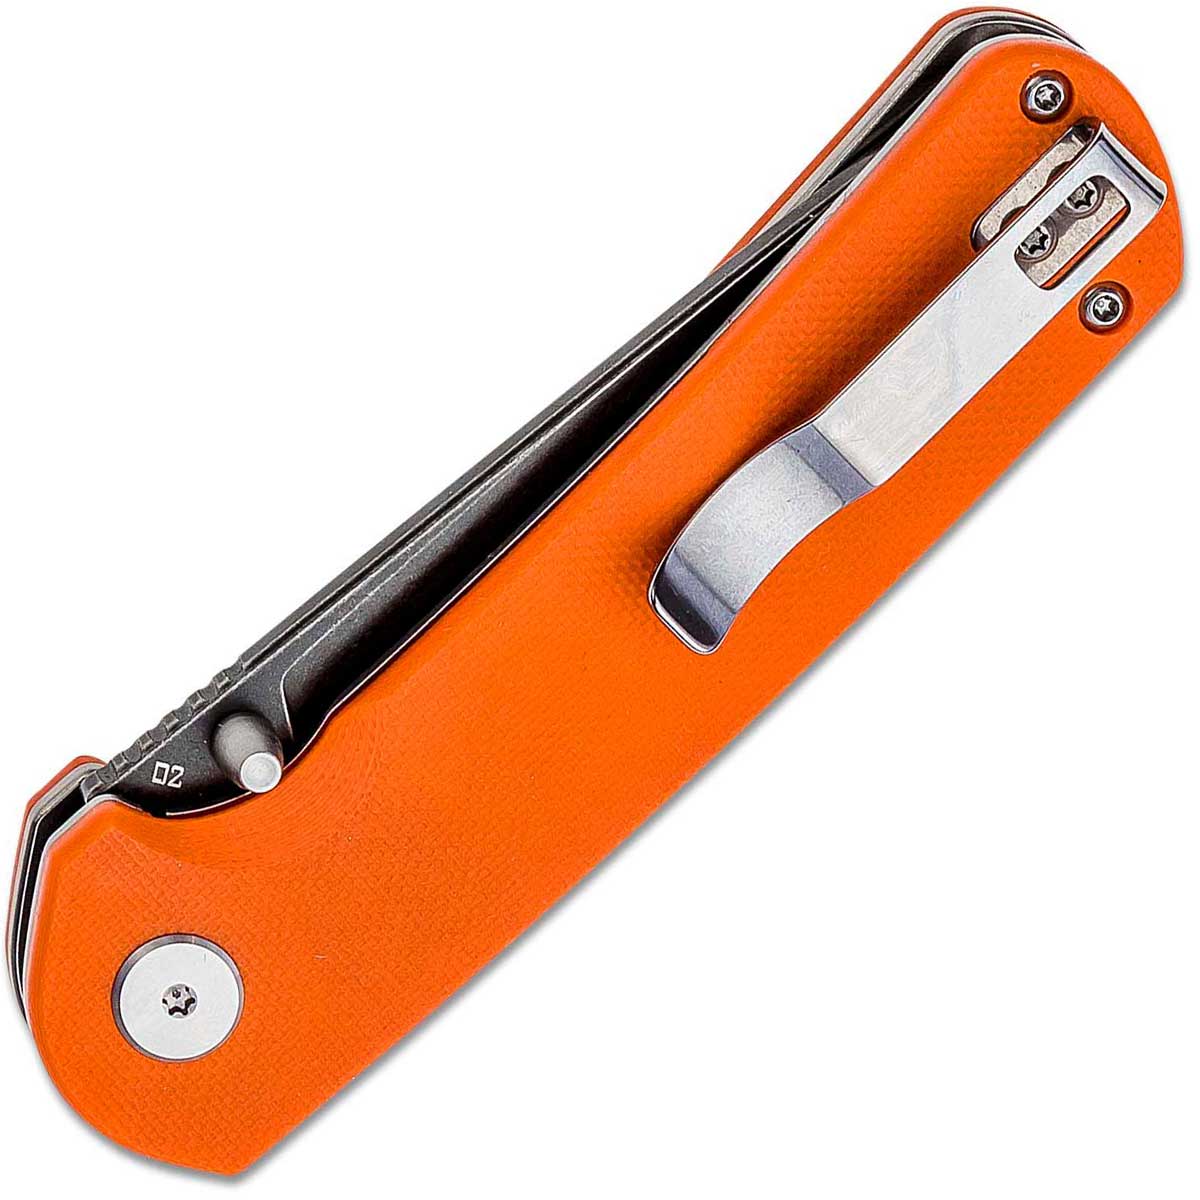 Nóż składany Bestech Knives Sledgehammer - Orange